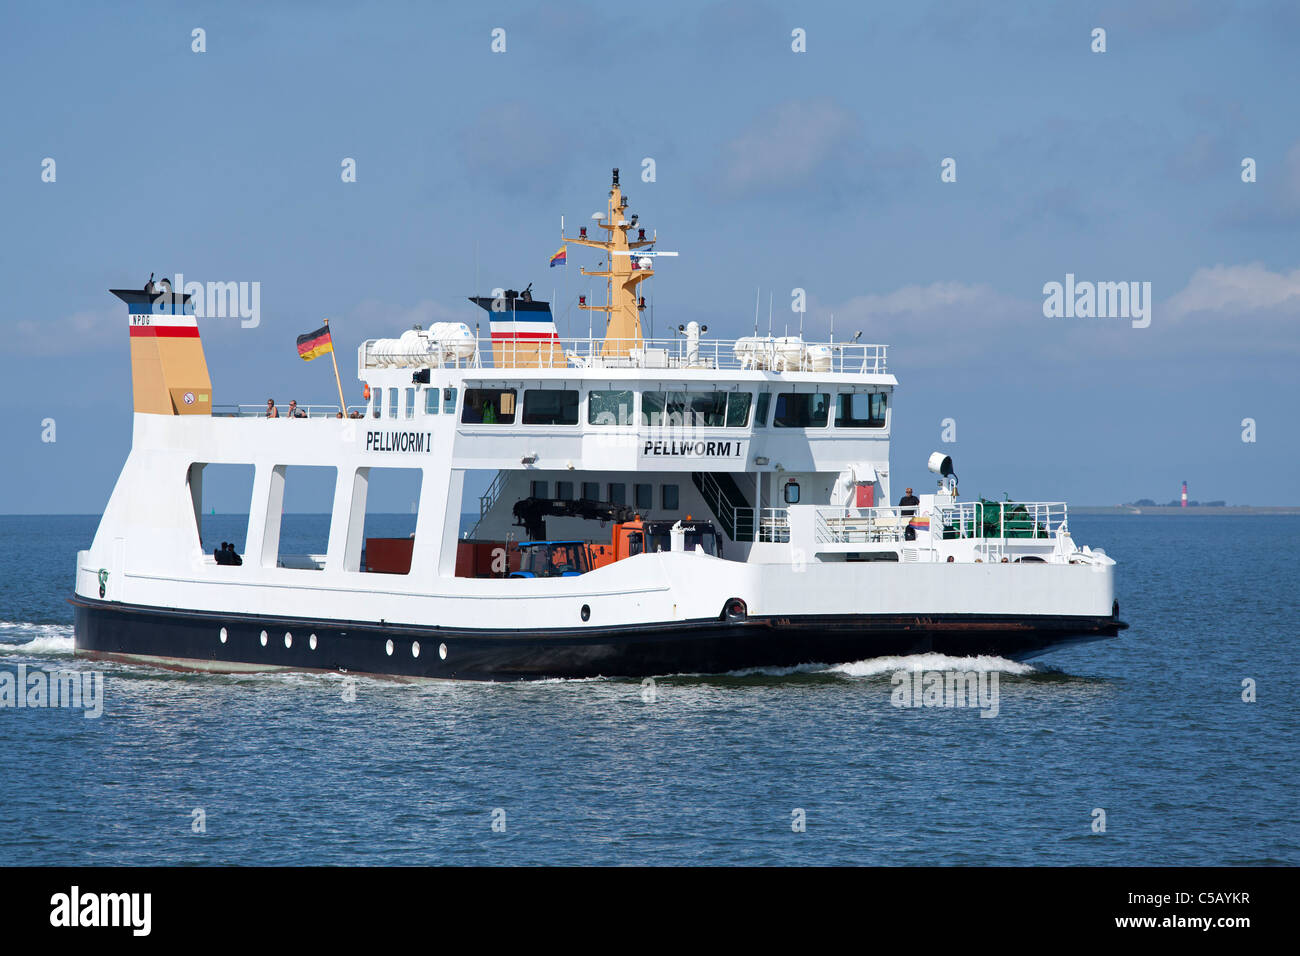 Pellworm-Ferry Strucklahnungshoern l'approche du port de la péninsule de Nordstrand, Schleswig-Holstein, Allemagne Banque D'Images